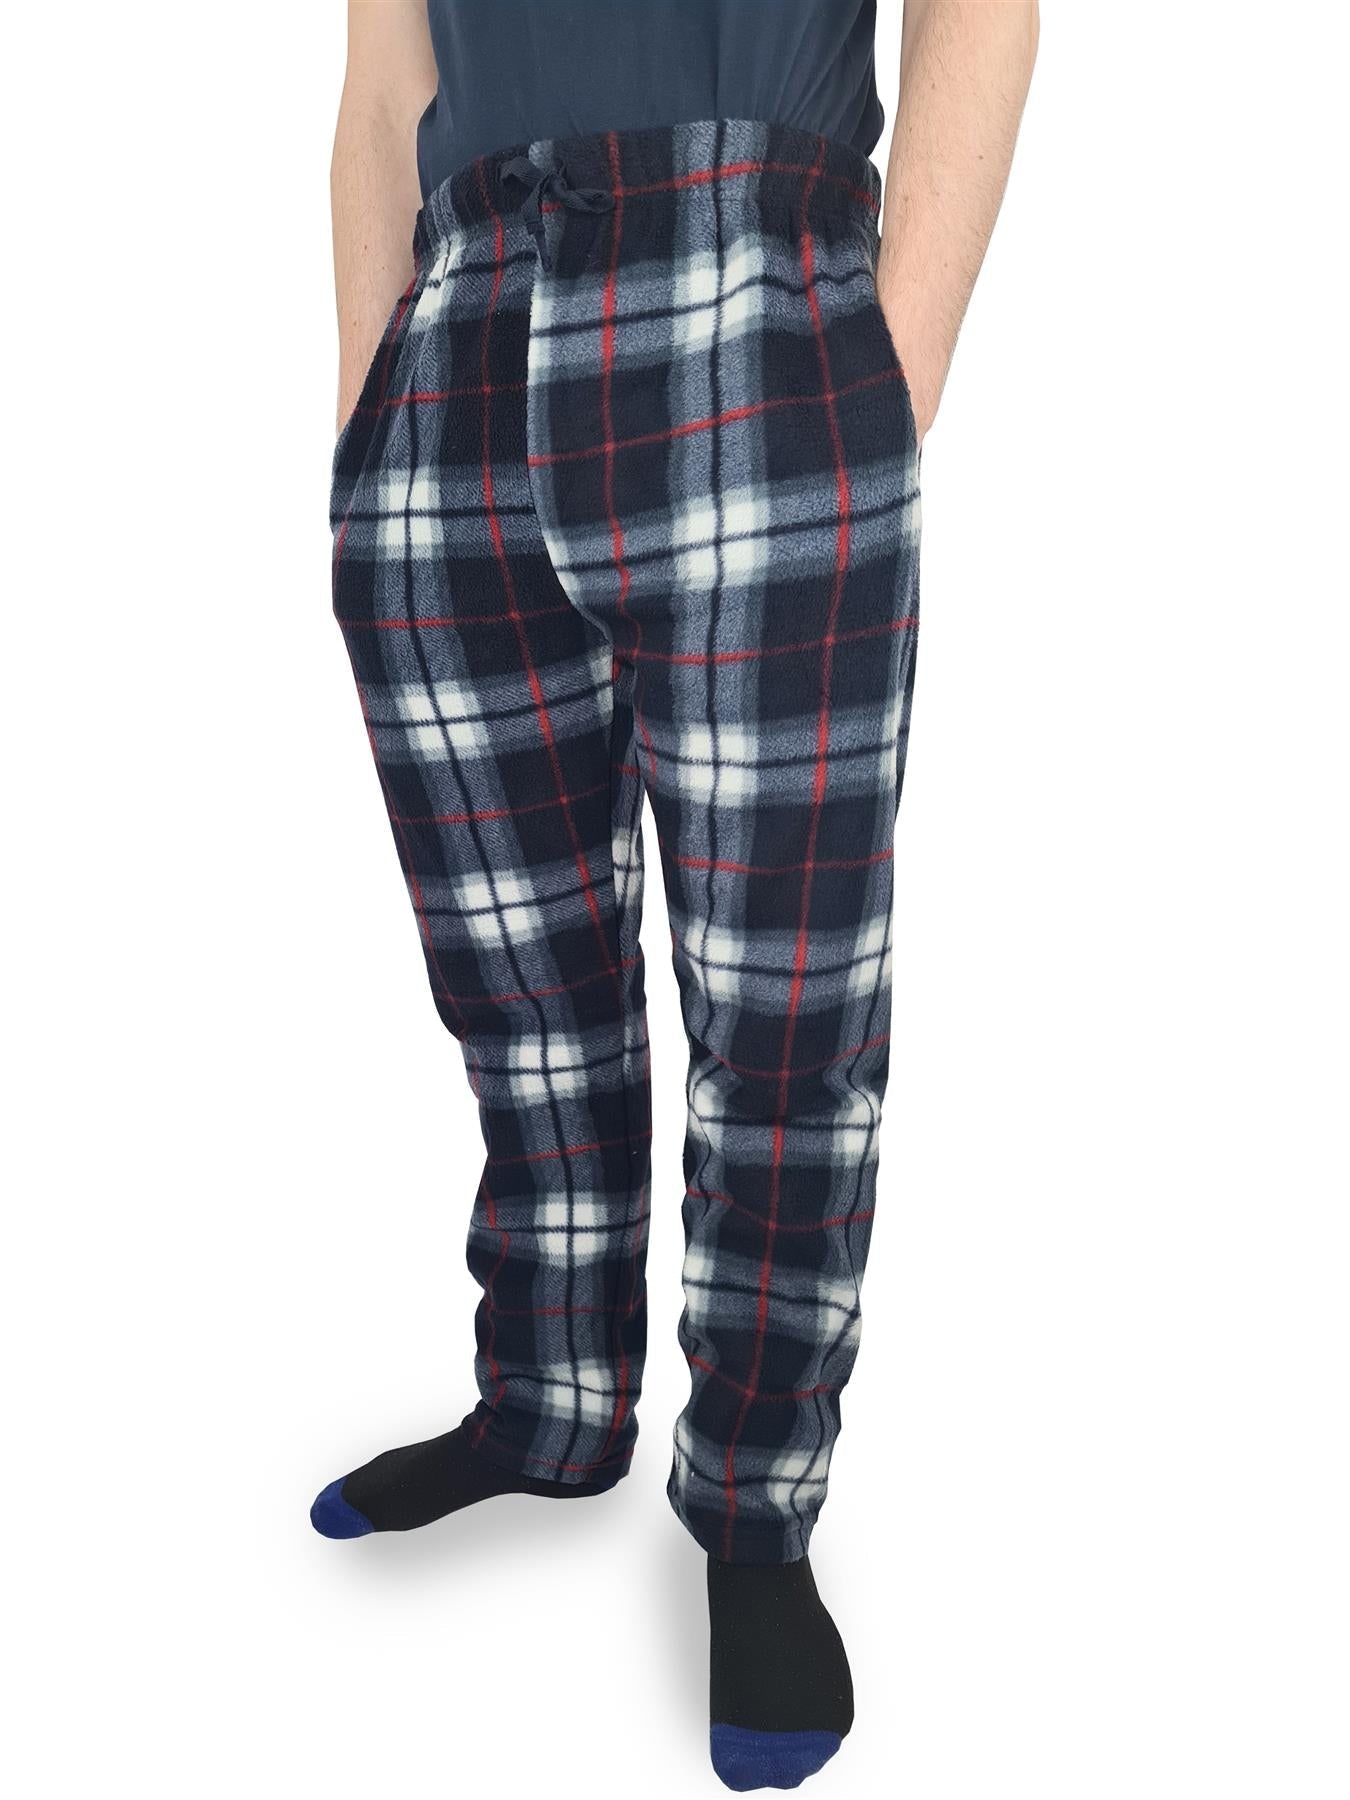 Hazy Blue Paxton Mens Fleece Pyjamas Bottoms - Premium clothing from Hazy Blue - Just $12.99! Shop now at Warwickshire Clothing